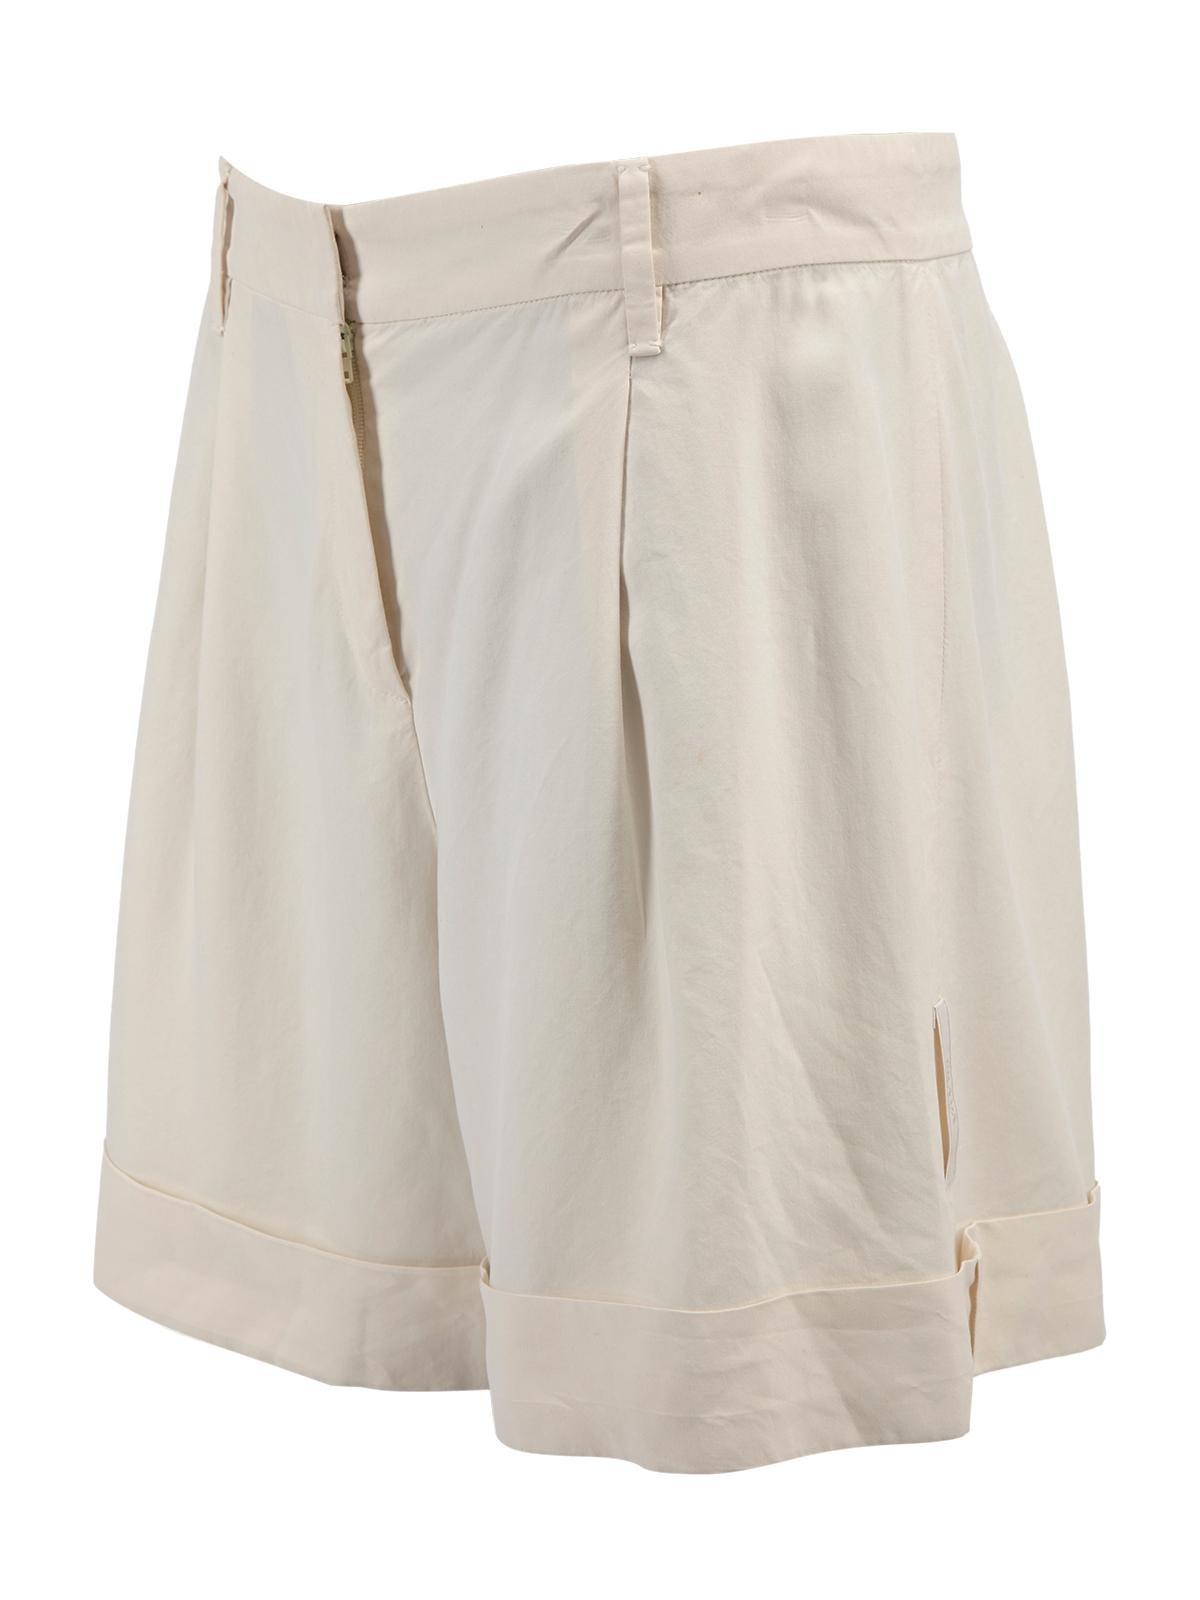 Pre-Loved Prada Women's Cream Wide Shorts 1